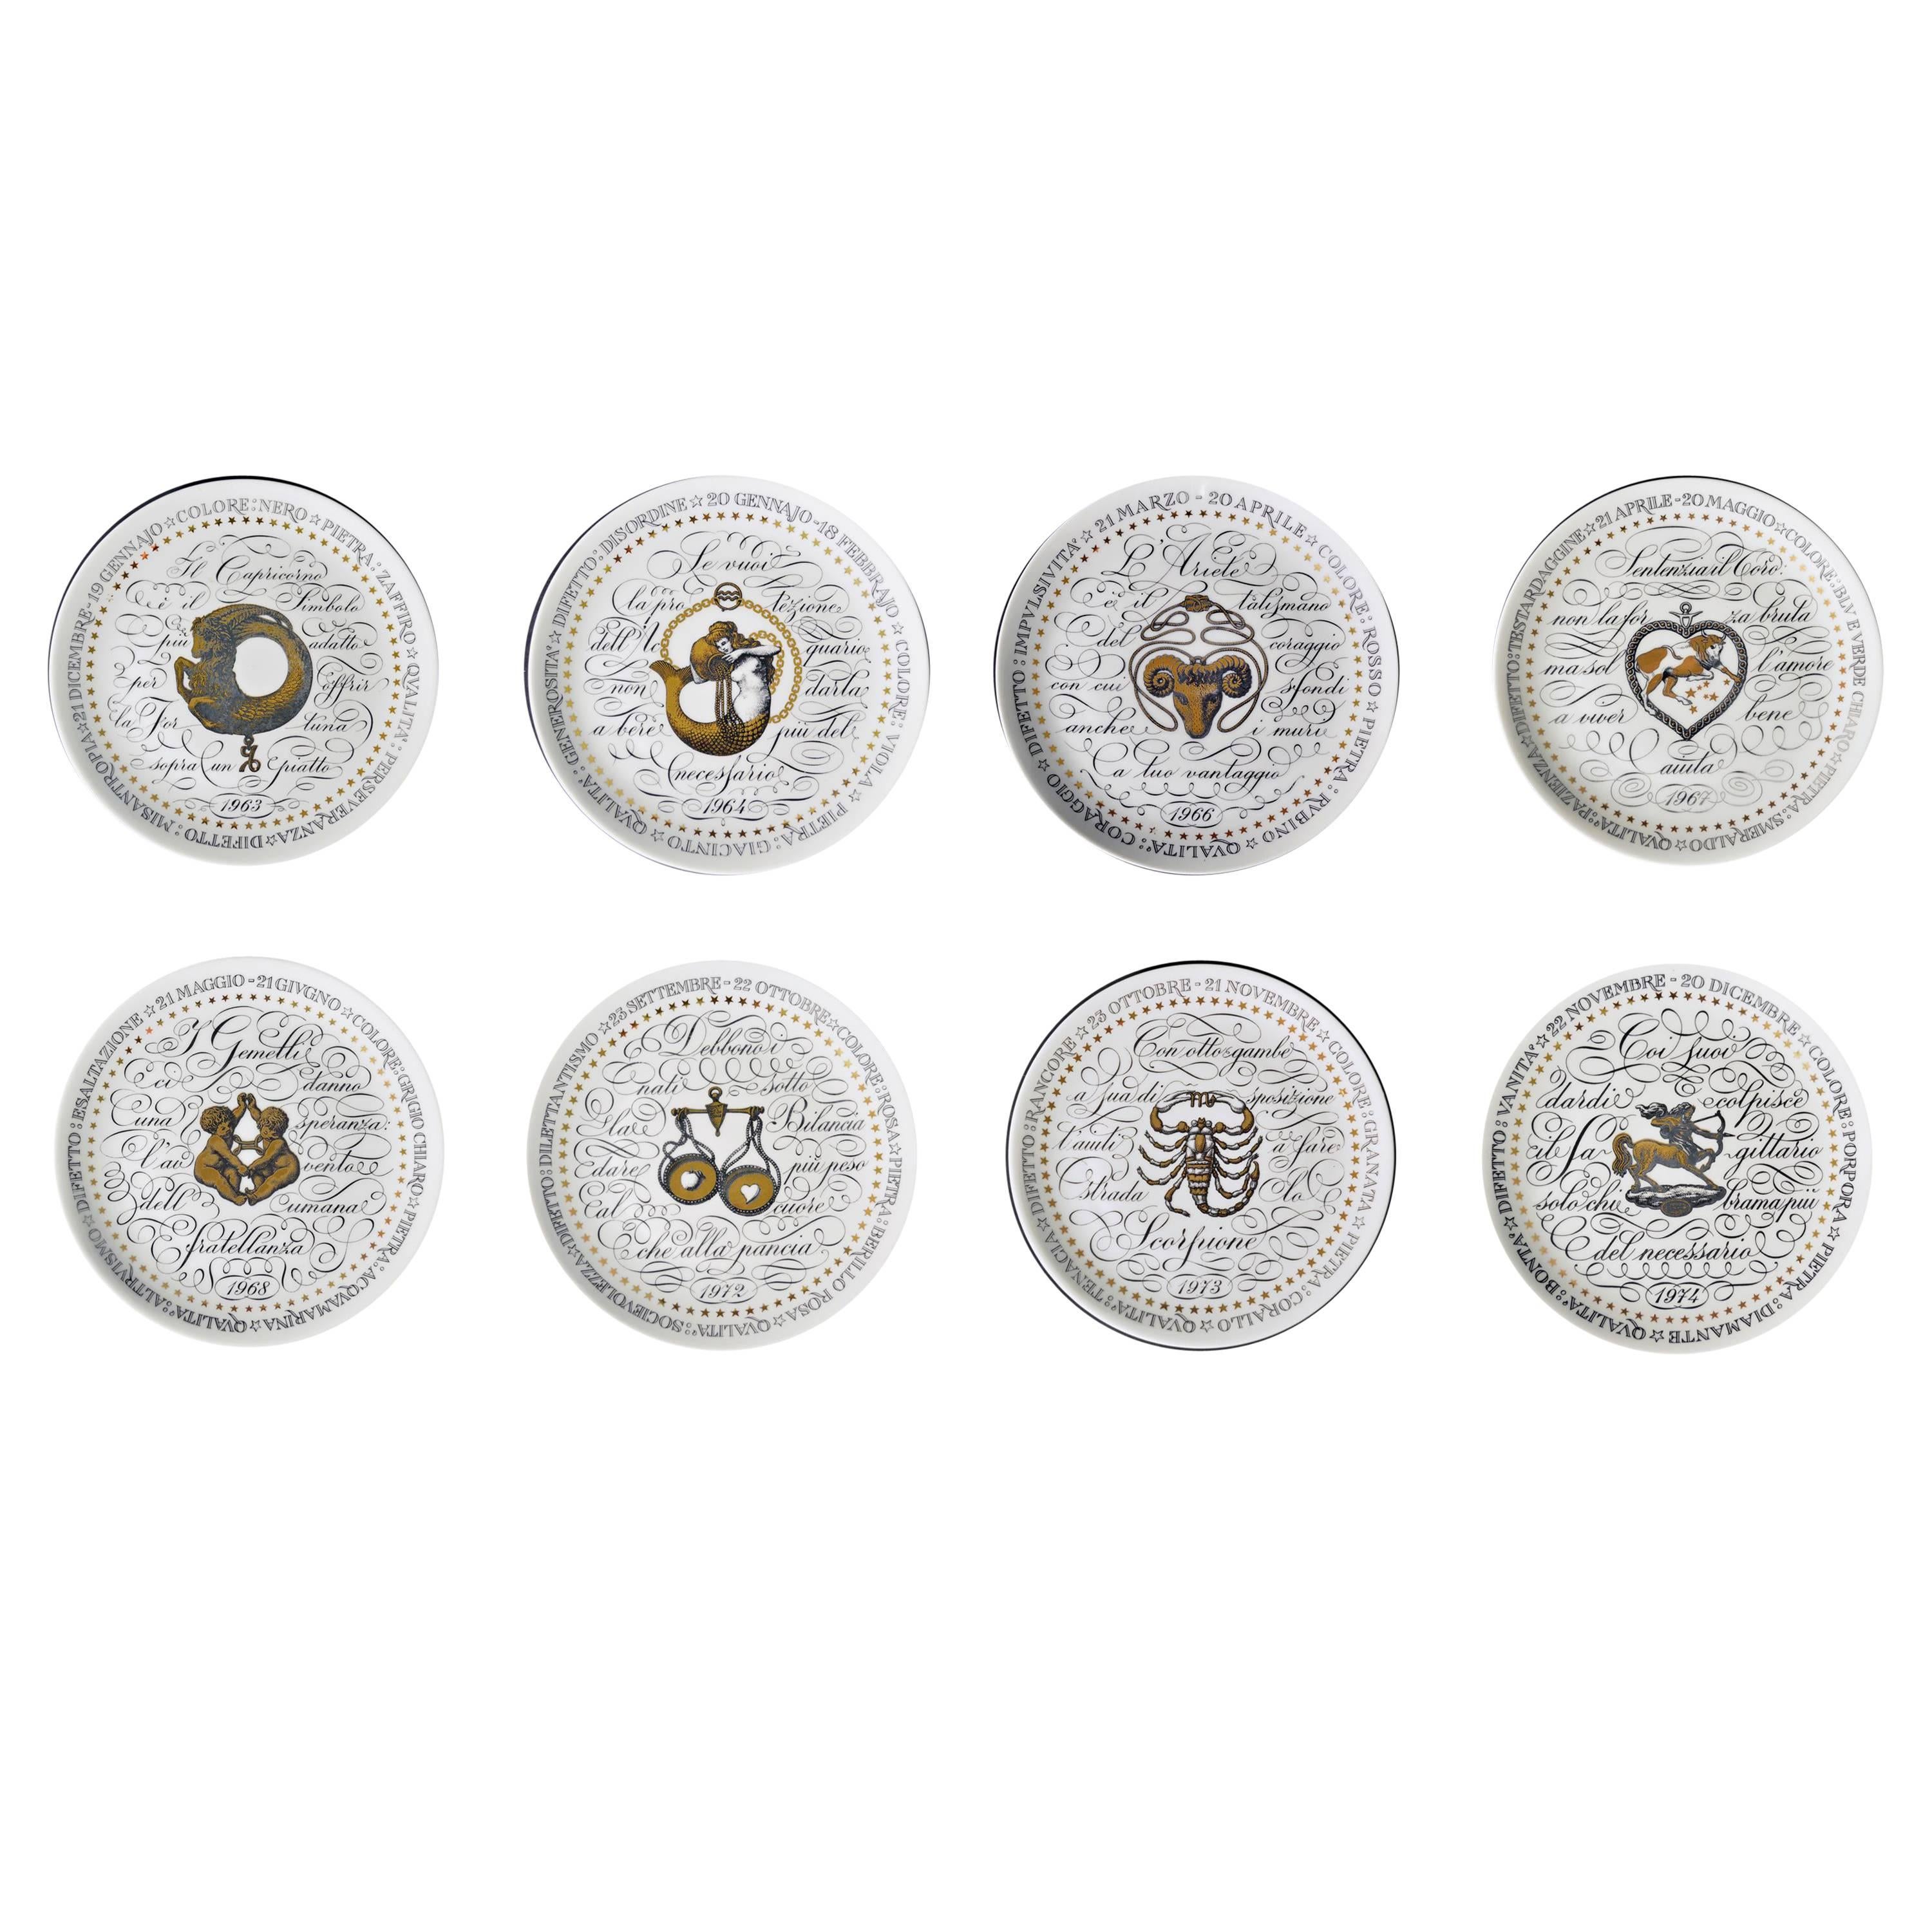 Piero Fornasetti Set of Eight Astrological Plates, Serie Zodiaci